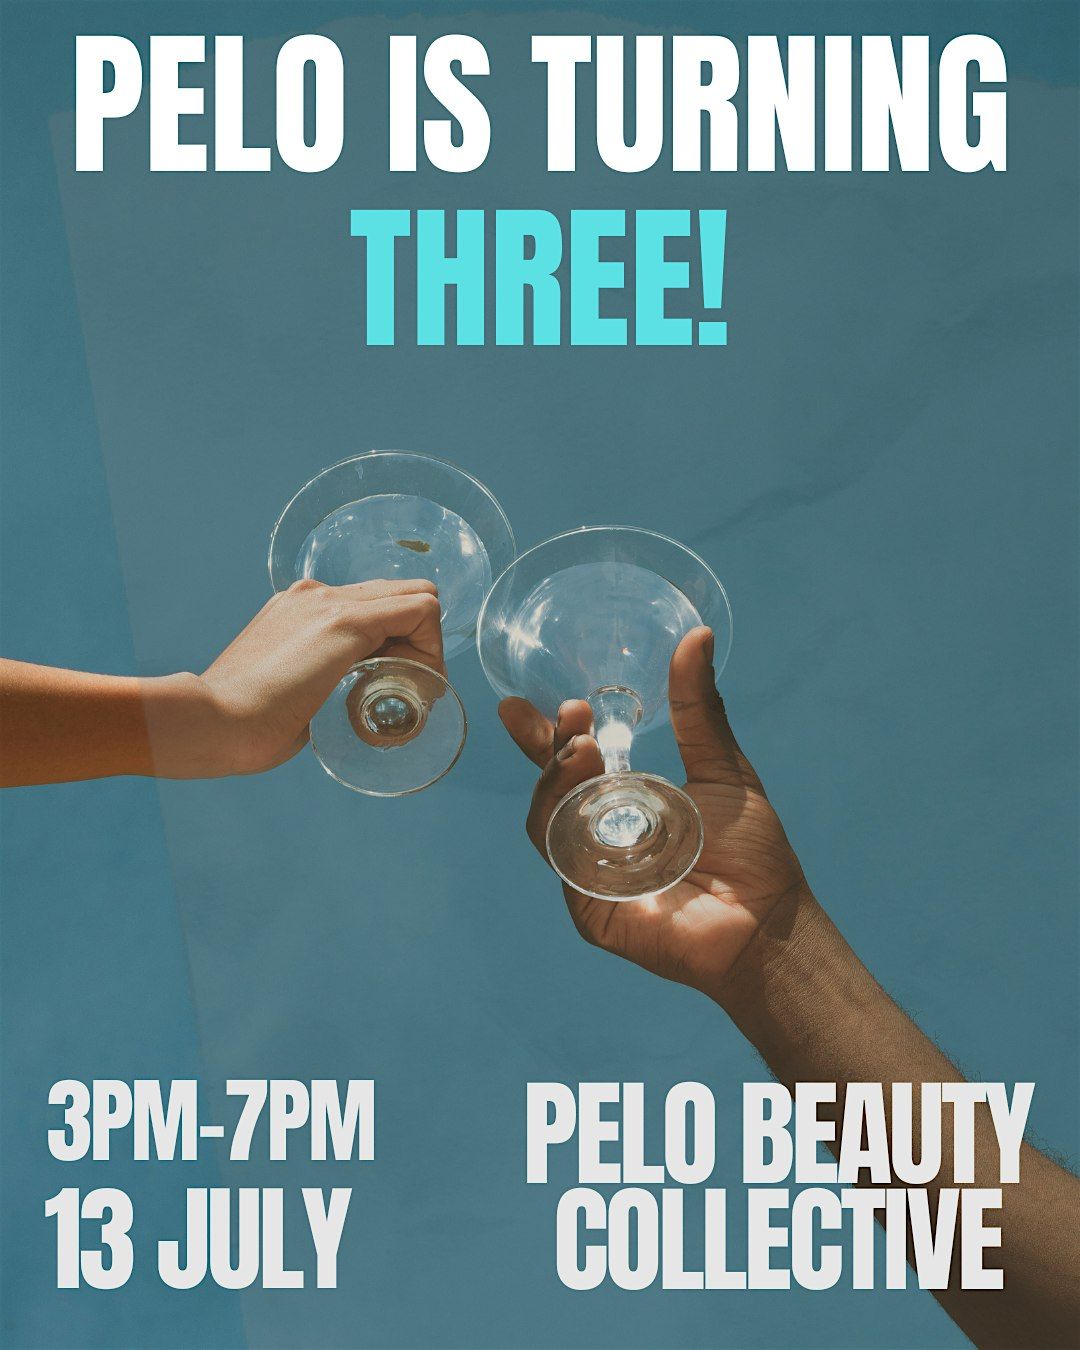 Pelo is THREE!